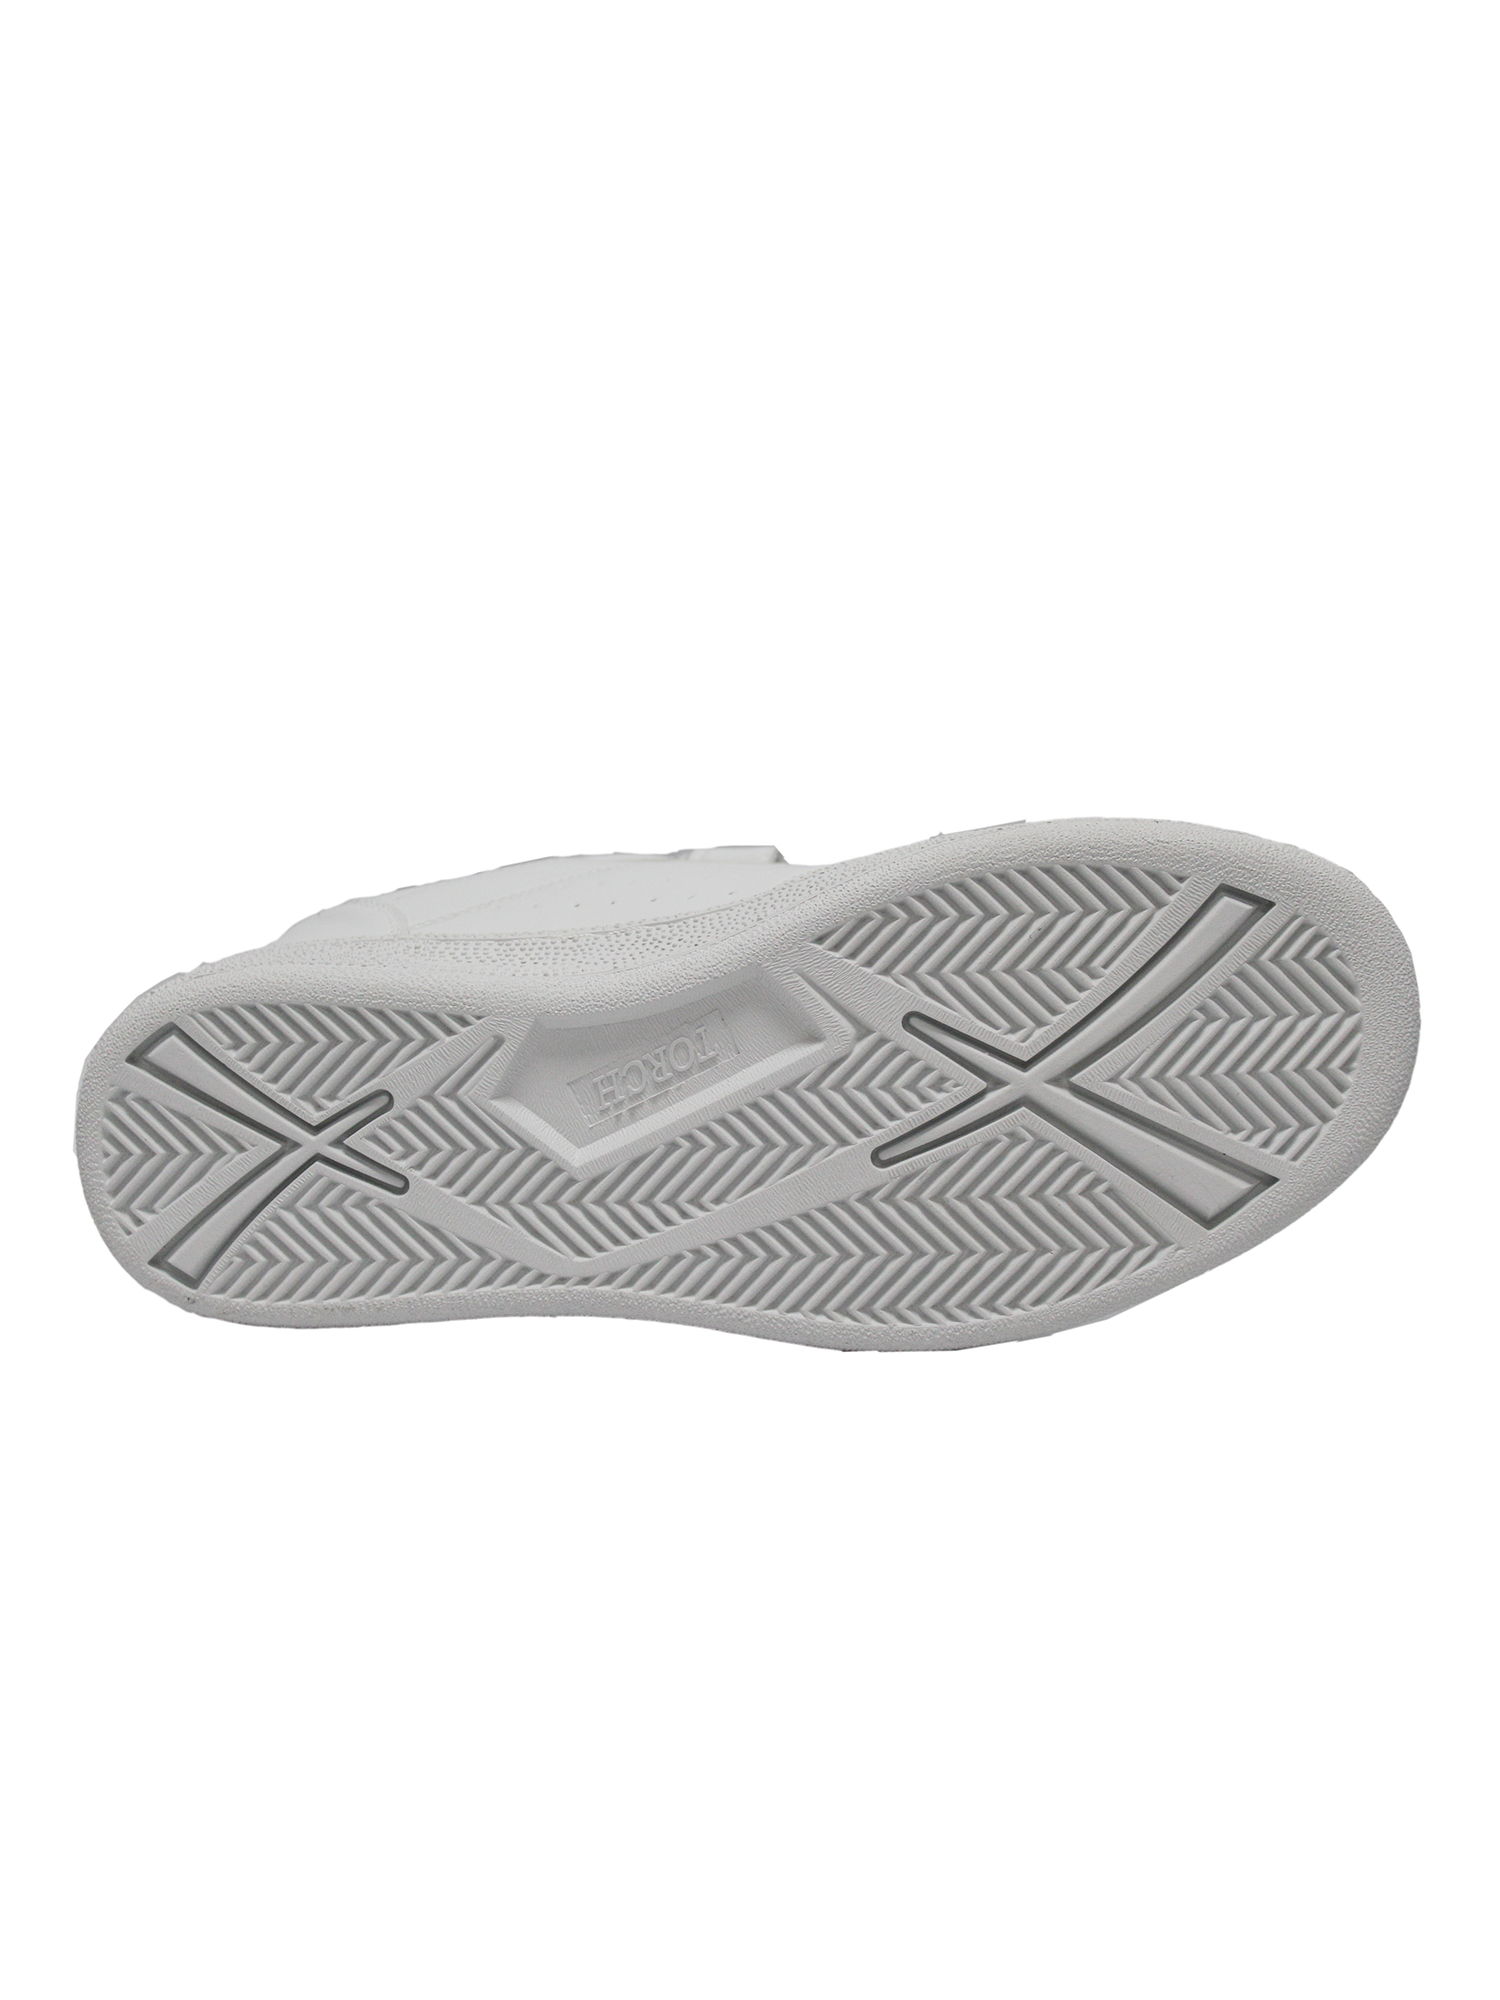 Tanleewa Men's Leather Strap Sneakers Lightweight Hook and Loop Walking Shoe Size 9.5 Adult Male - image 4 of 5